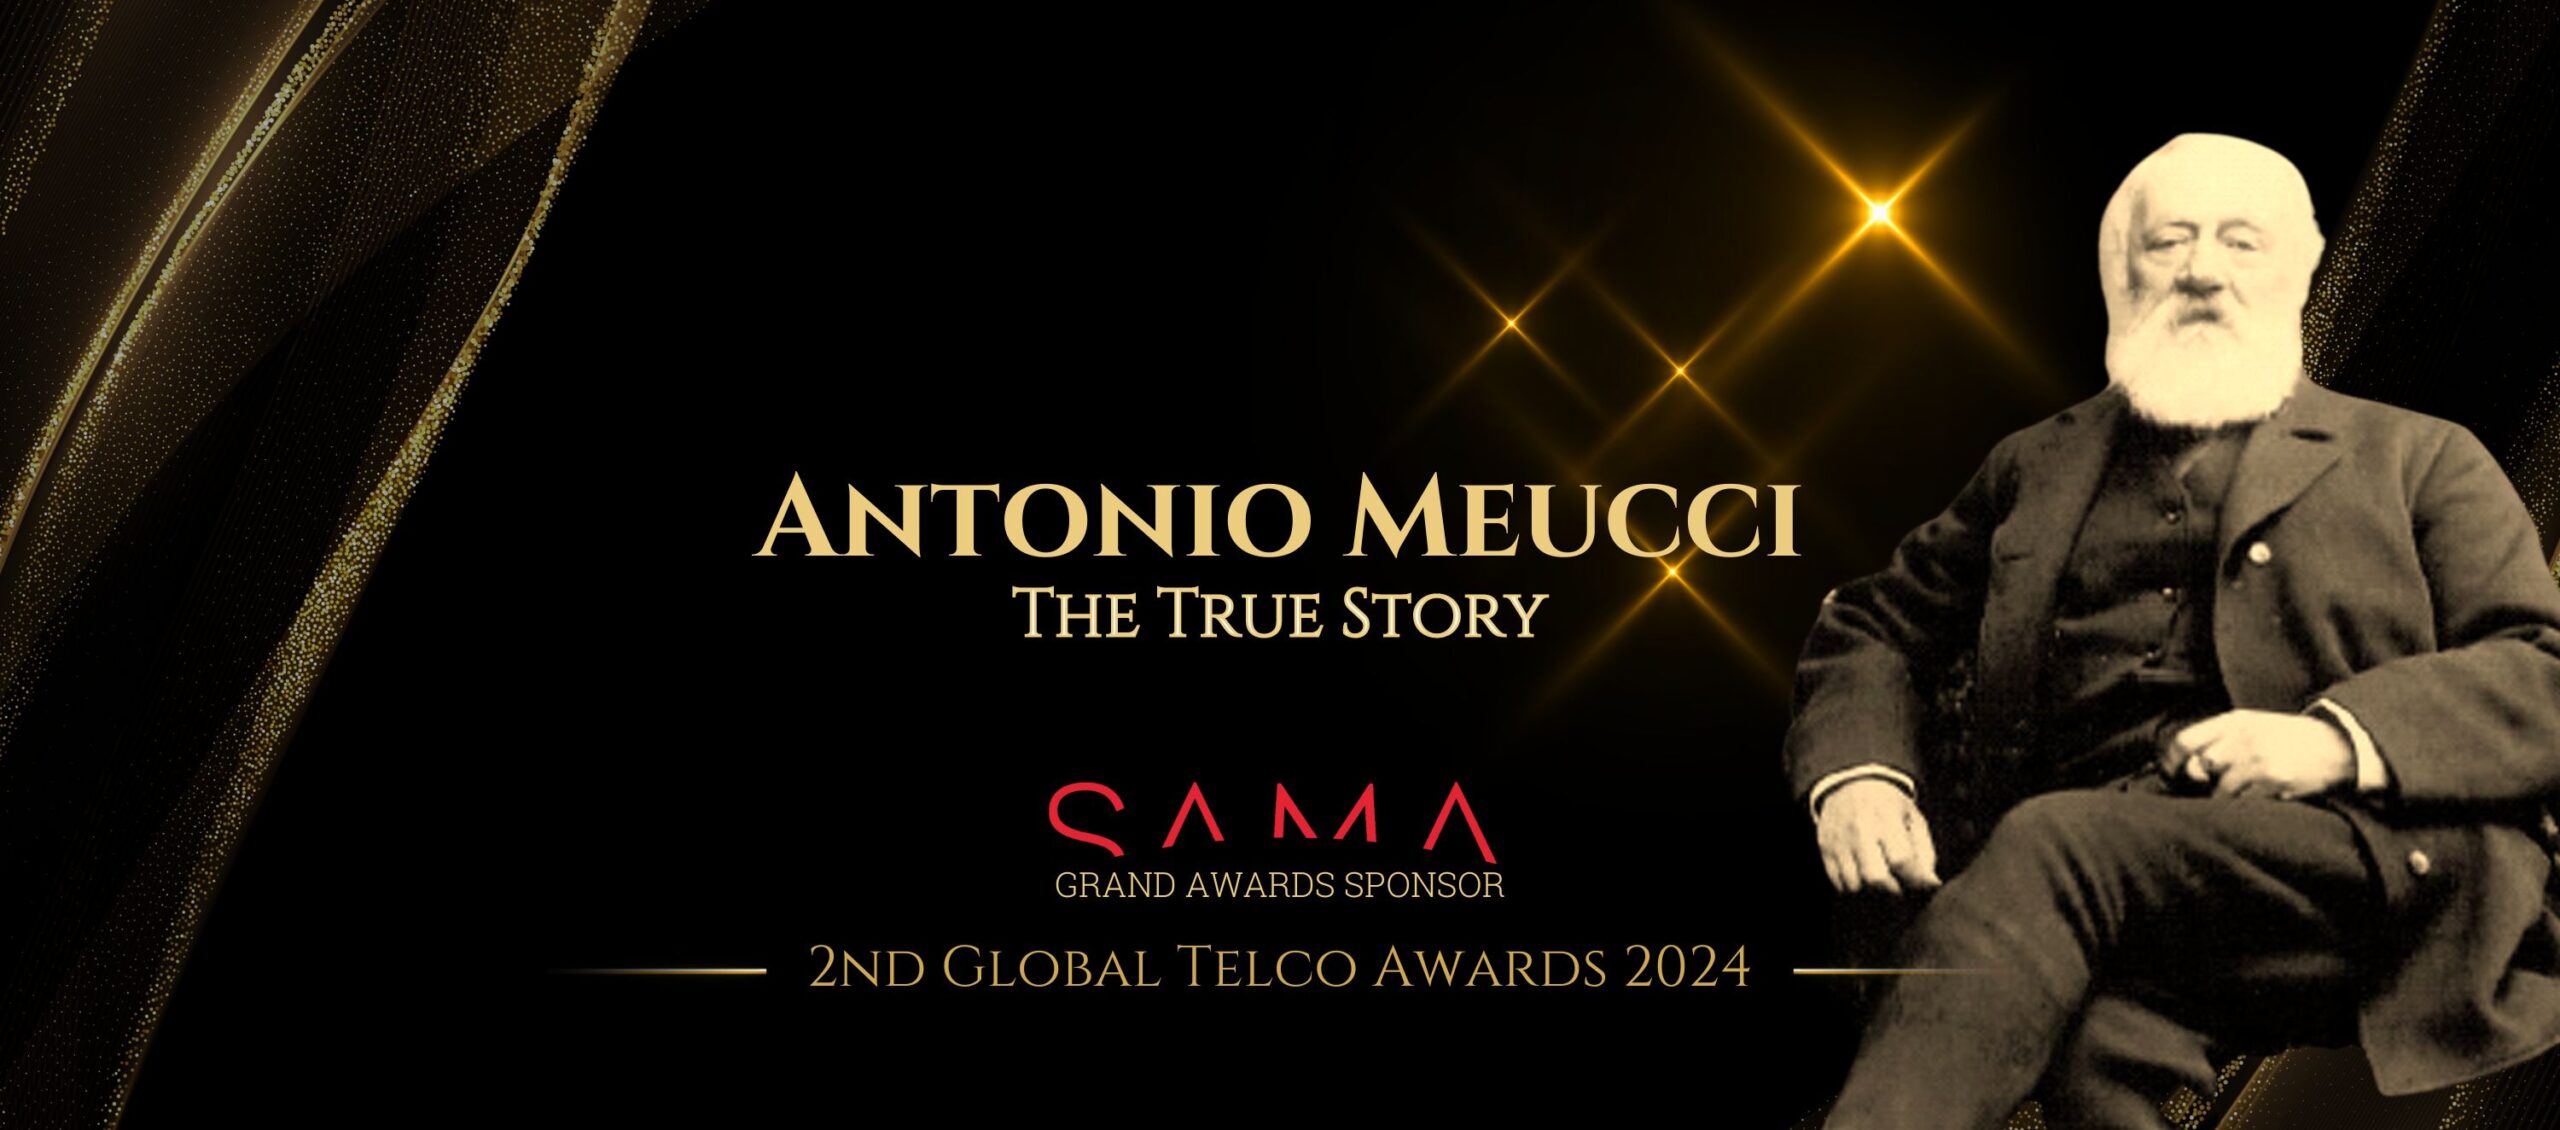 ANTONIO MEUCCI AWARDS 2024 SPONSORED BY SAMA TELECOM